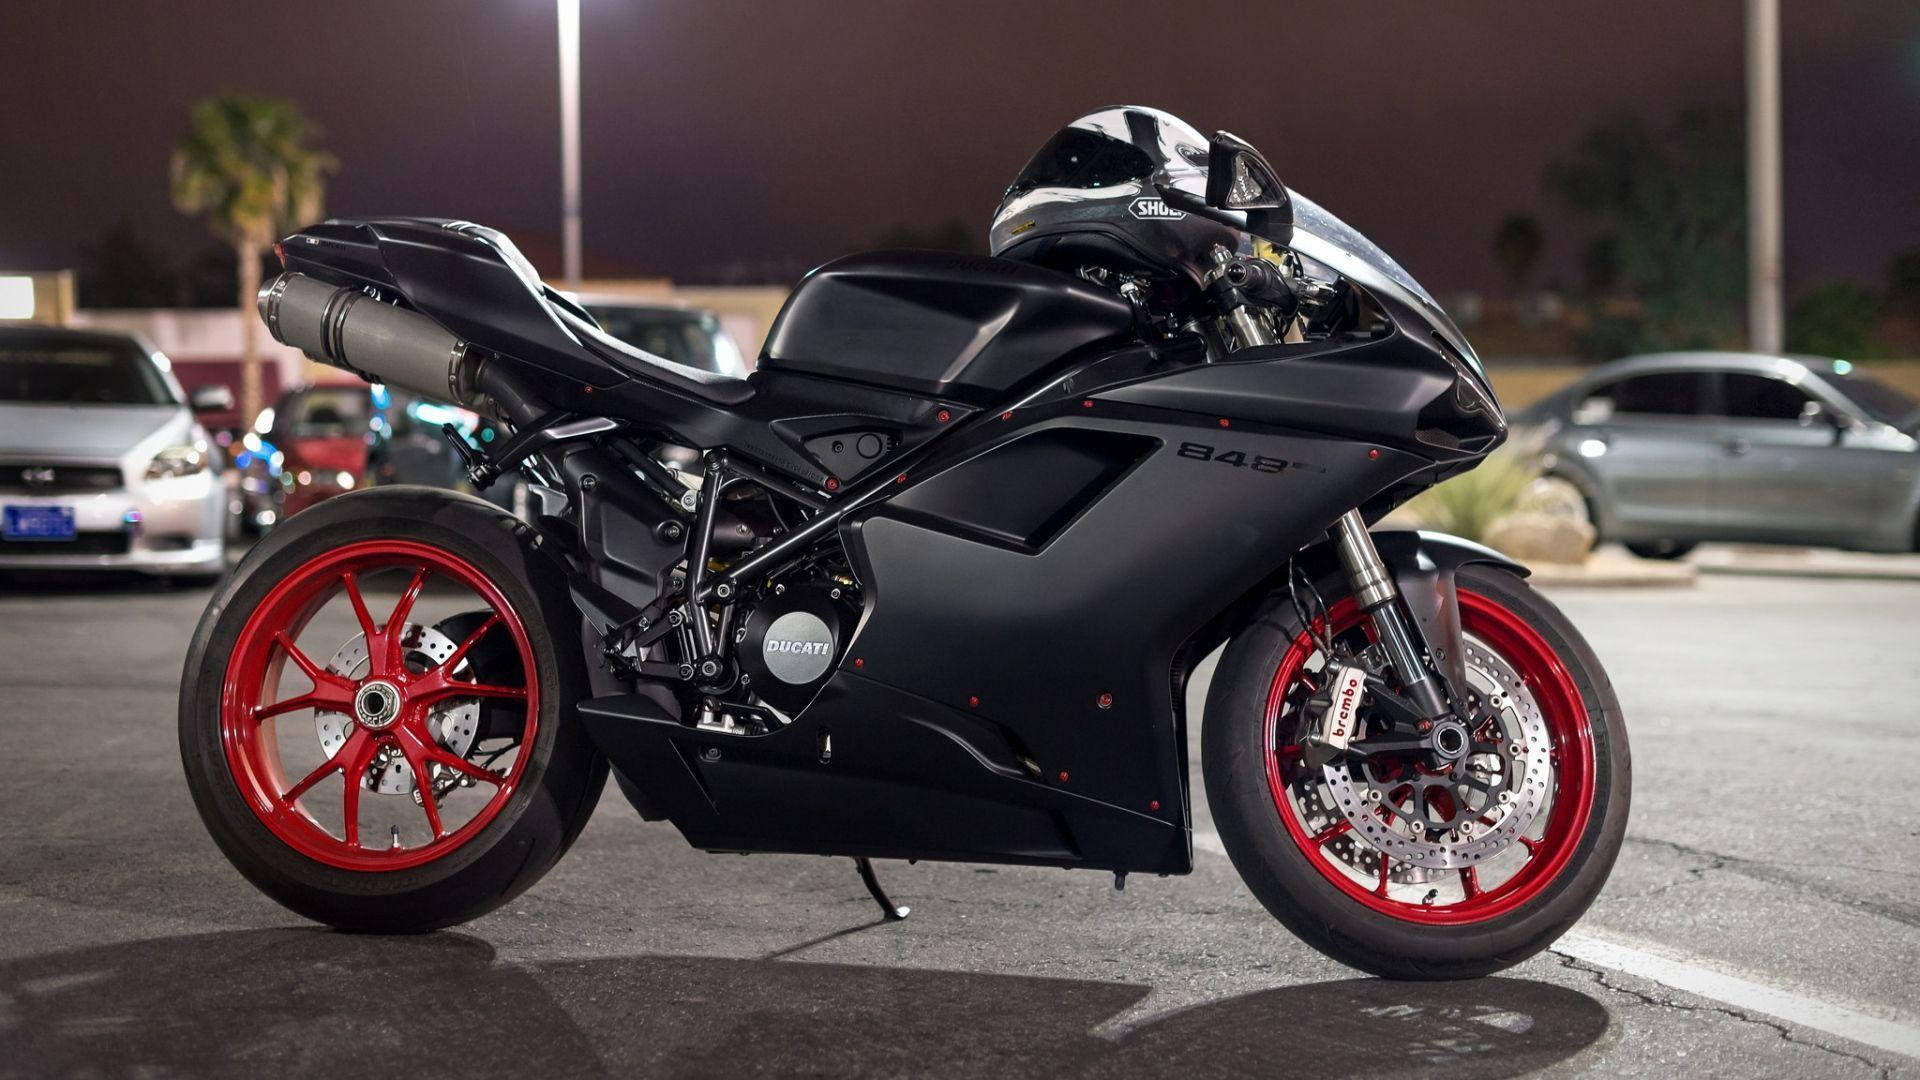 Caption: Majestic Black Ducati 848 Bike In Hd Background